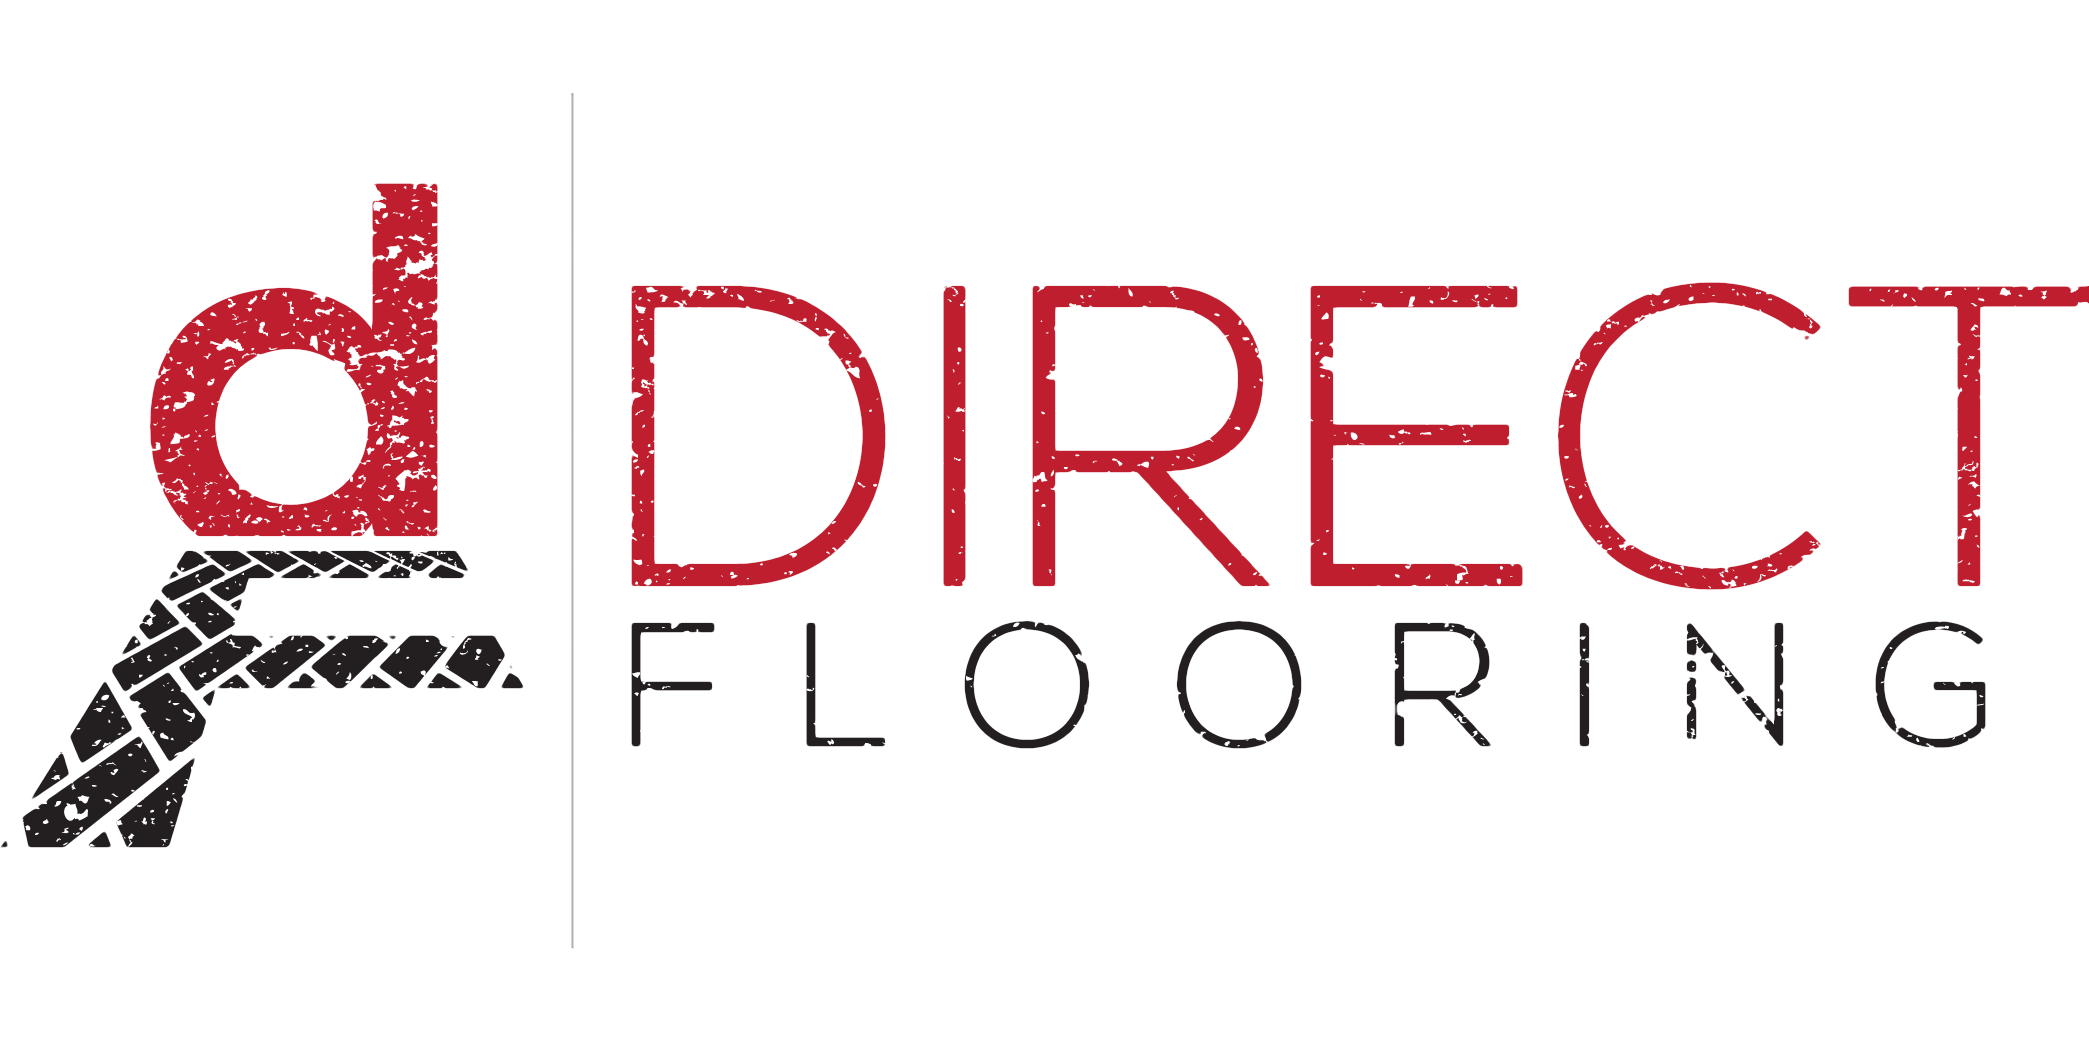 Direct Flooring